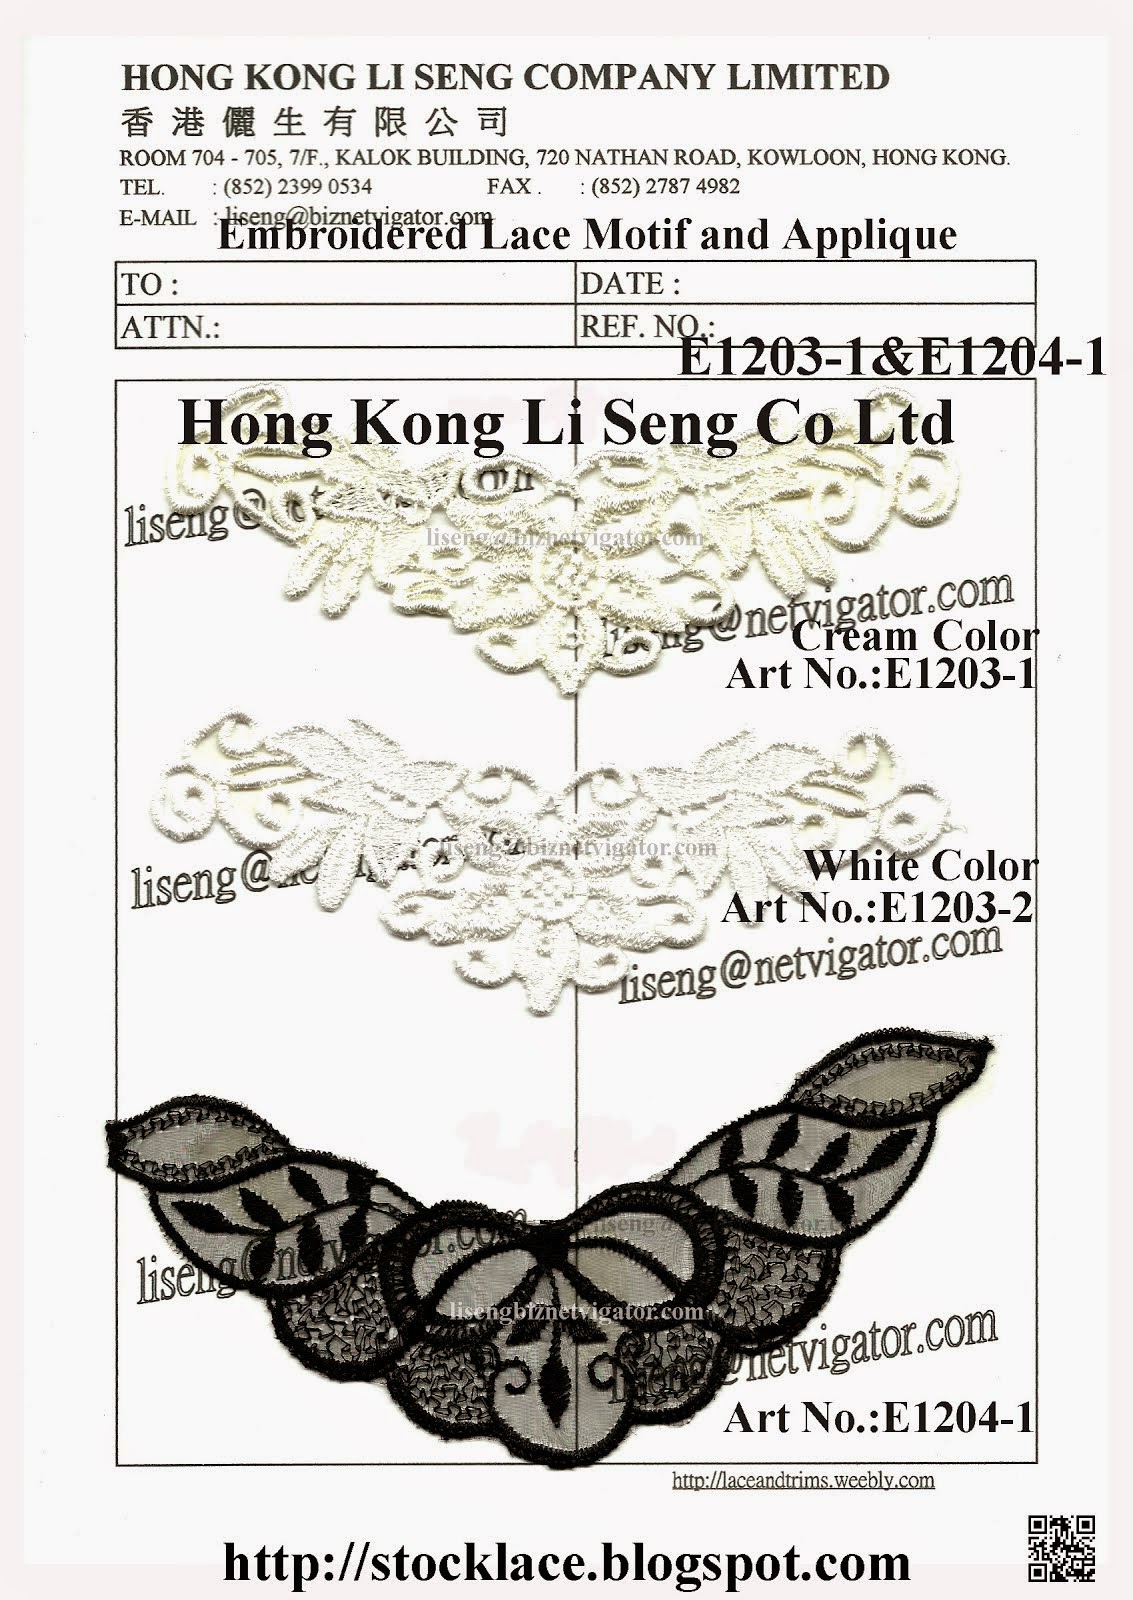 Small Order for stocklot Lace Motif and Applique Manufacturer - Hong Kong Li Seng Co Ltd